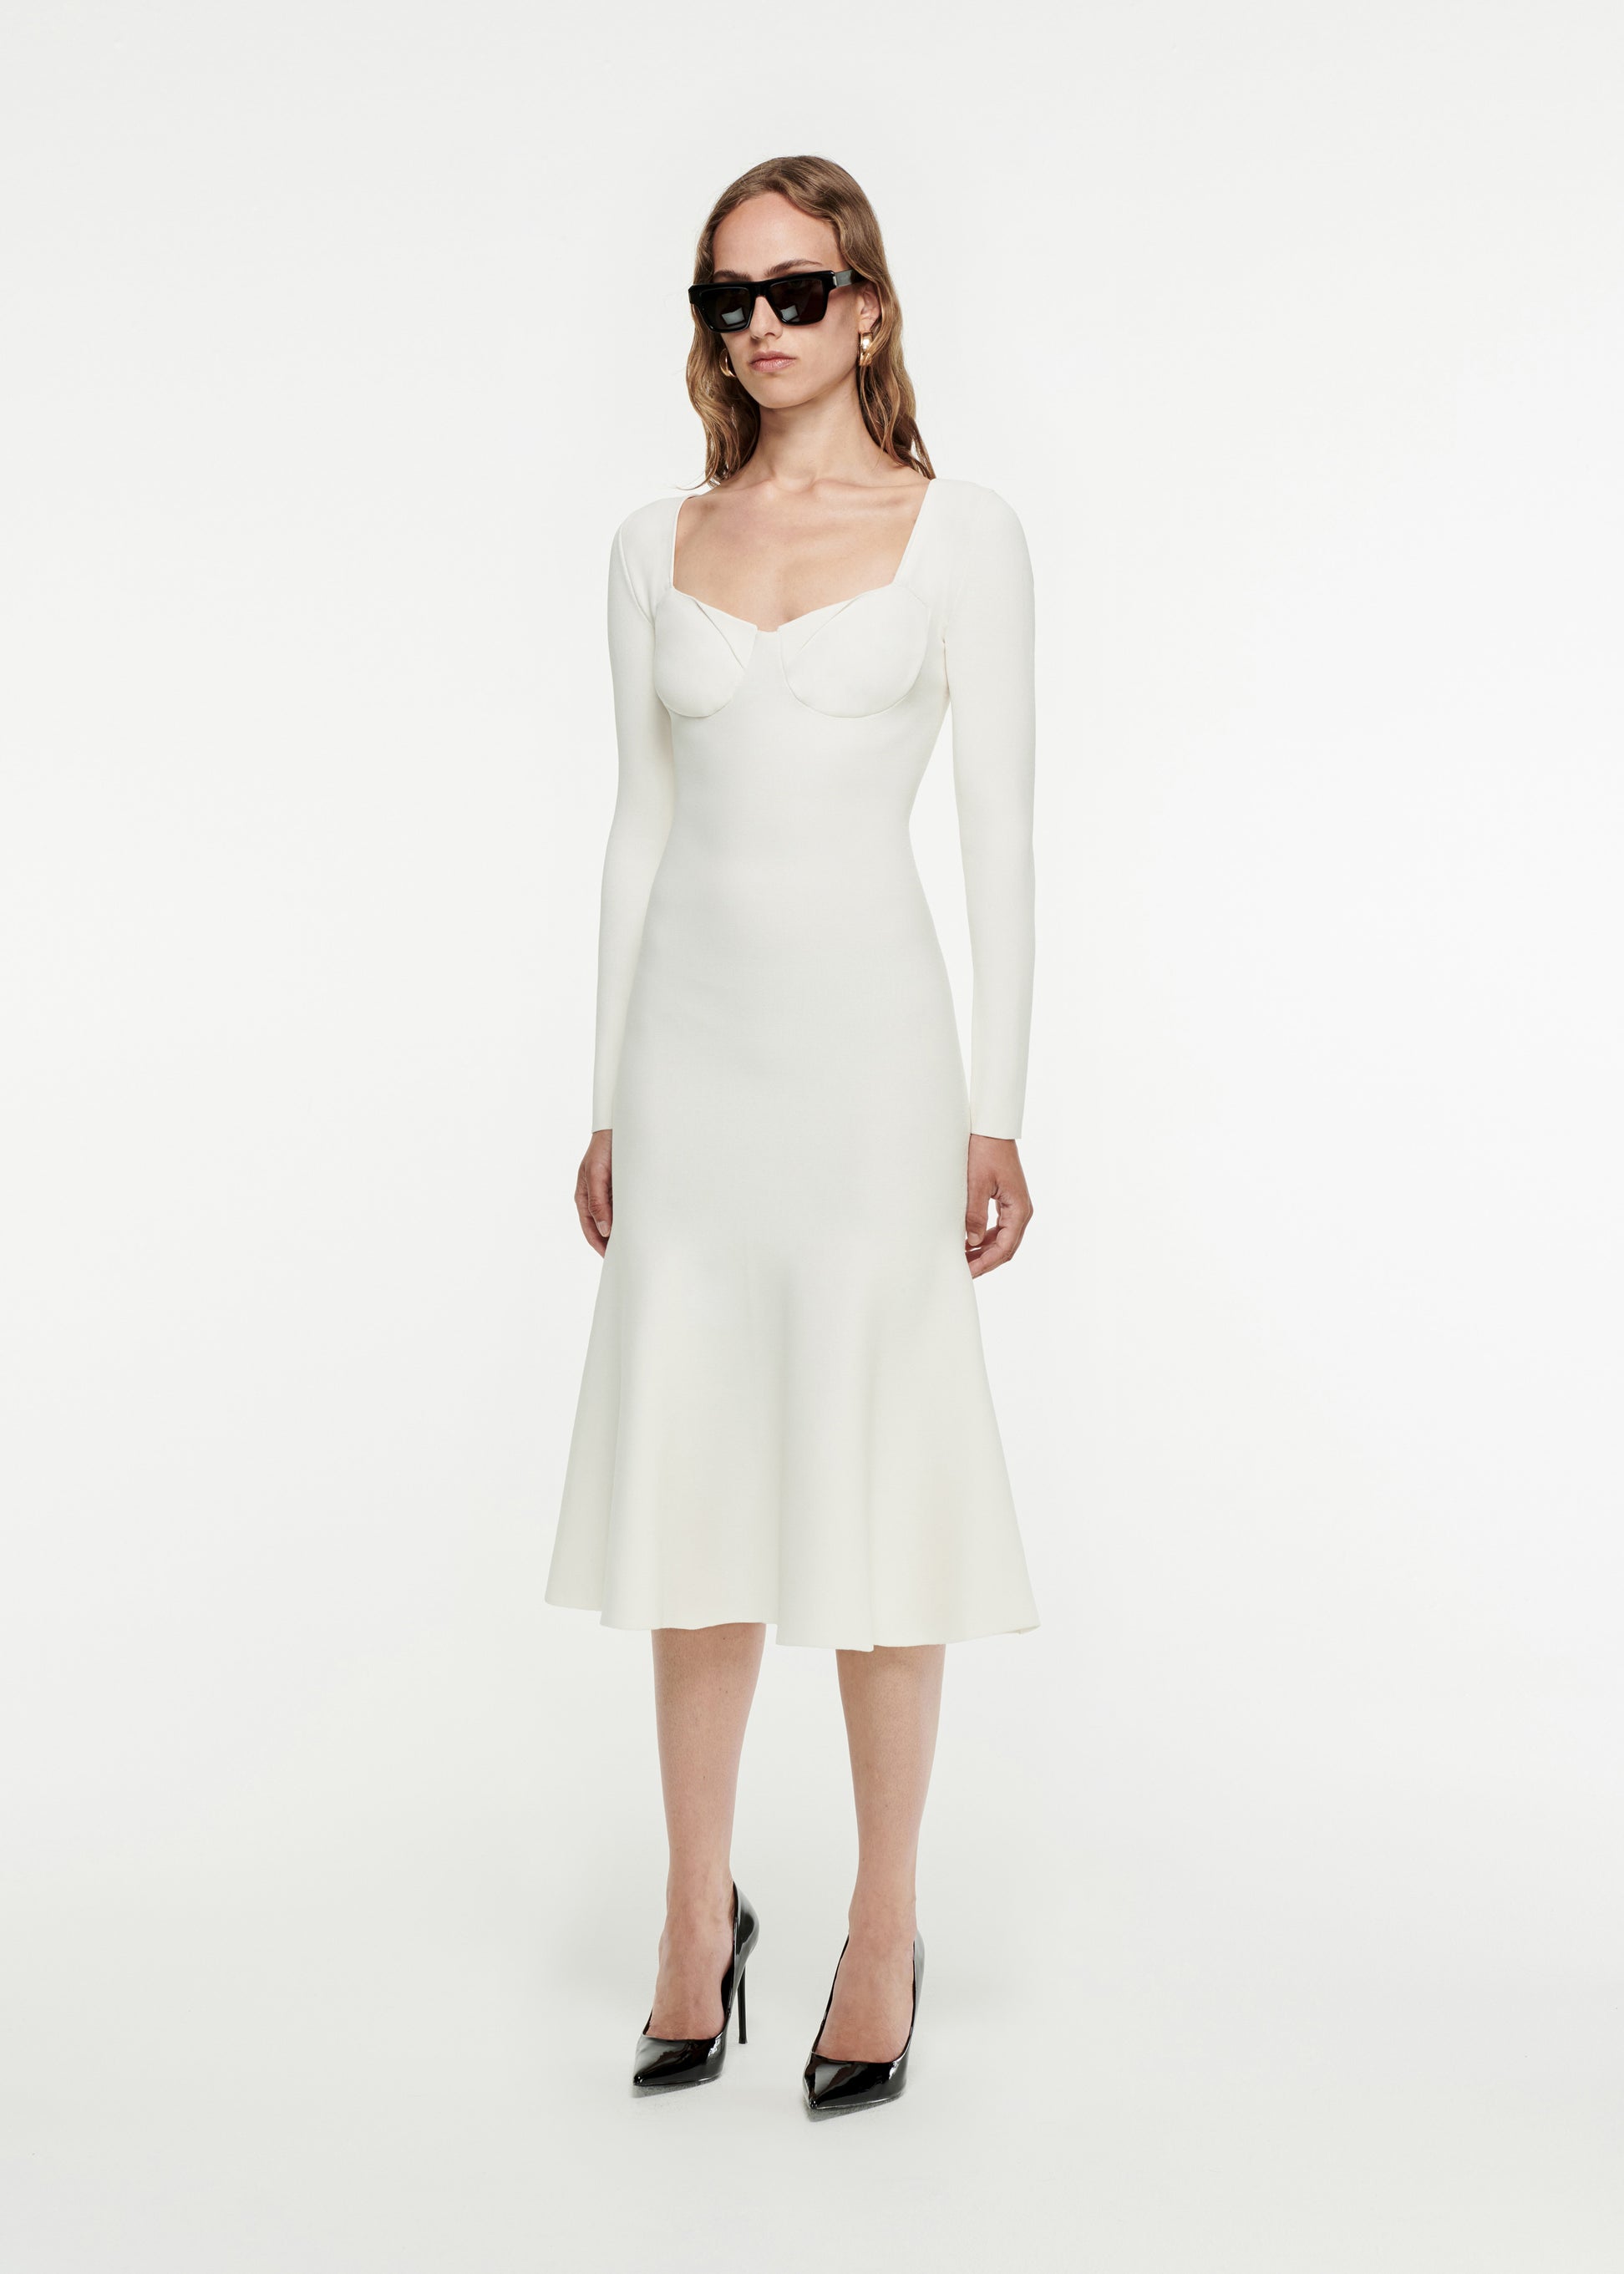 Woman wearing the Long Sleeve Knit Dress in White 